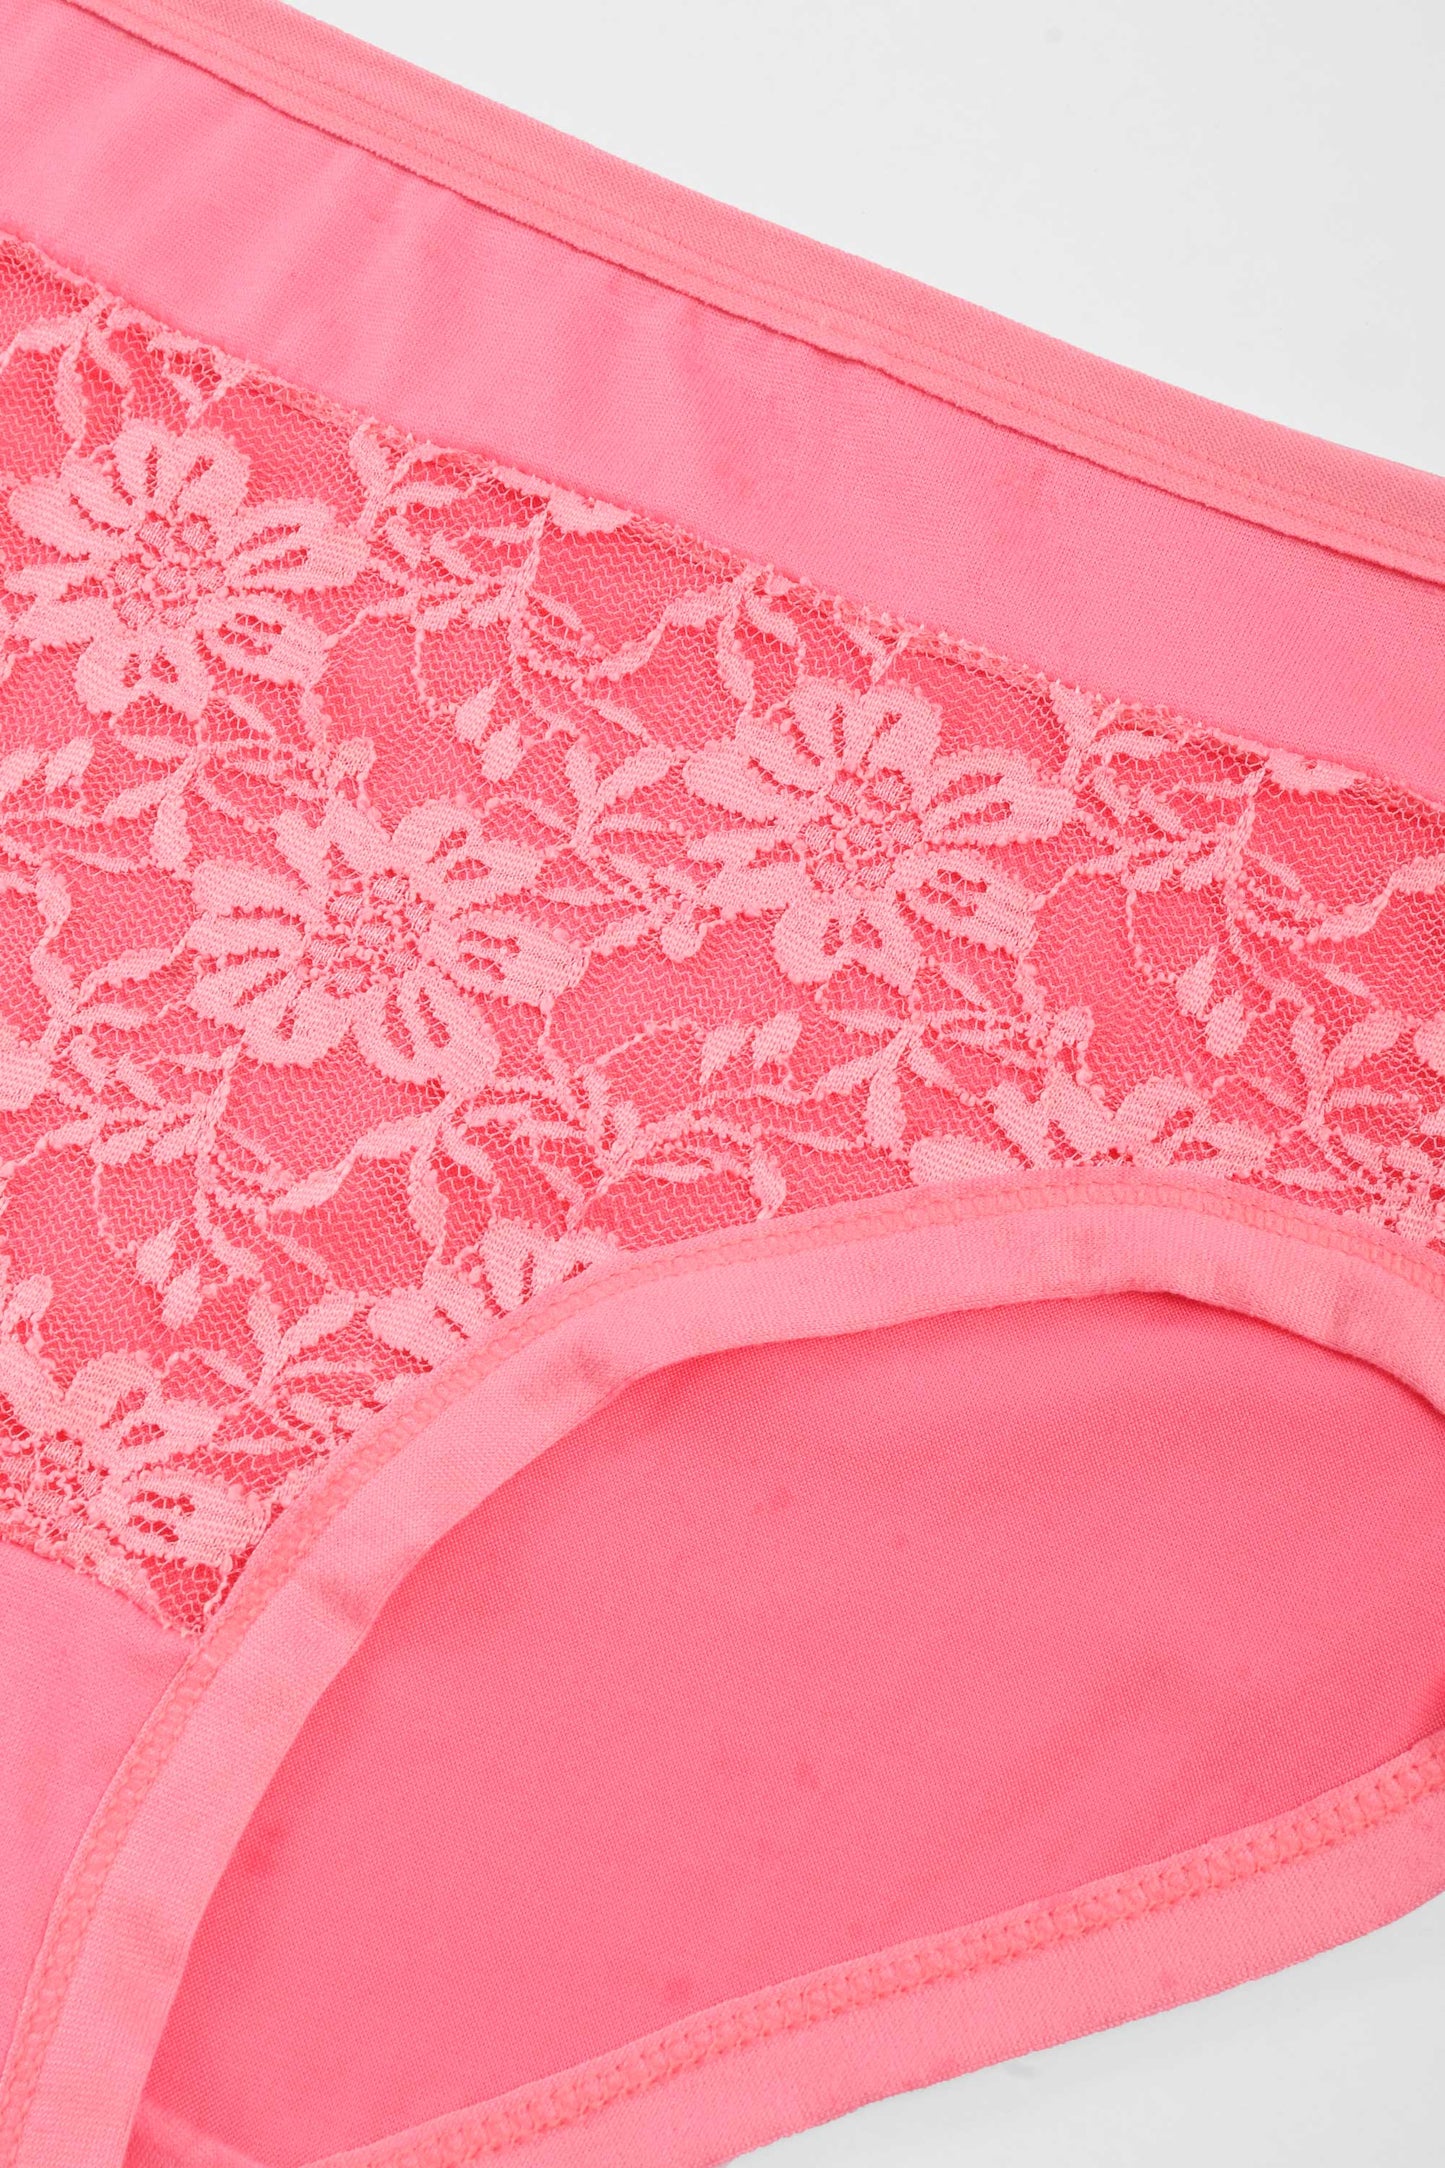 Geelong Women's Floral Lace Design Underwear